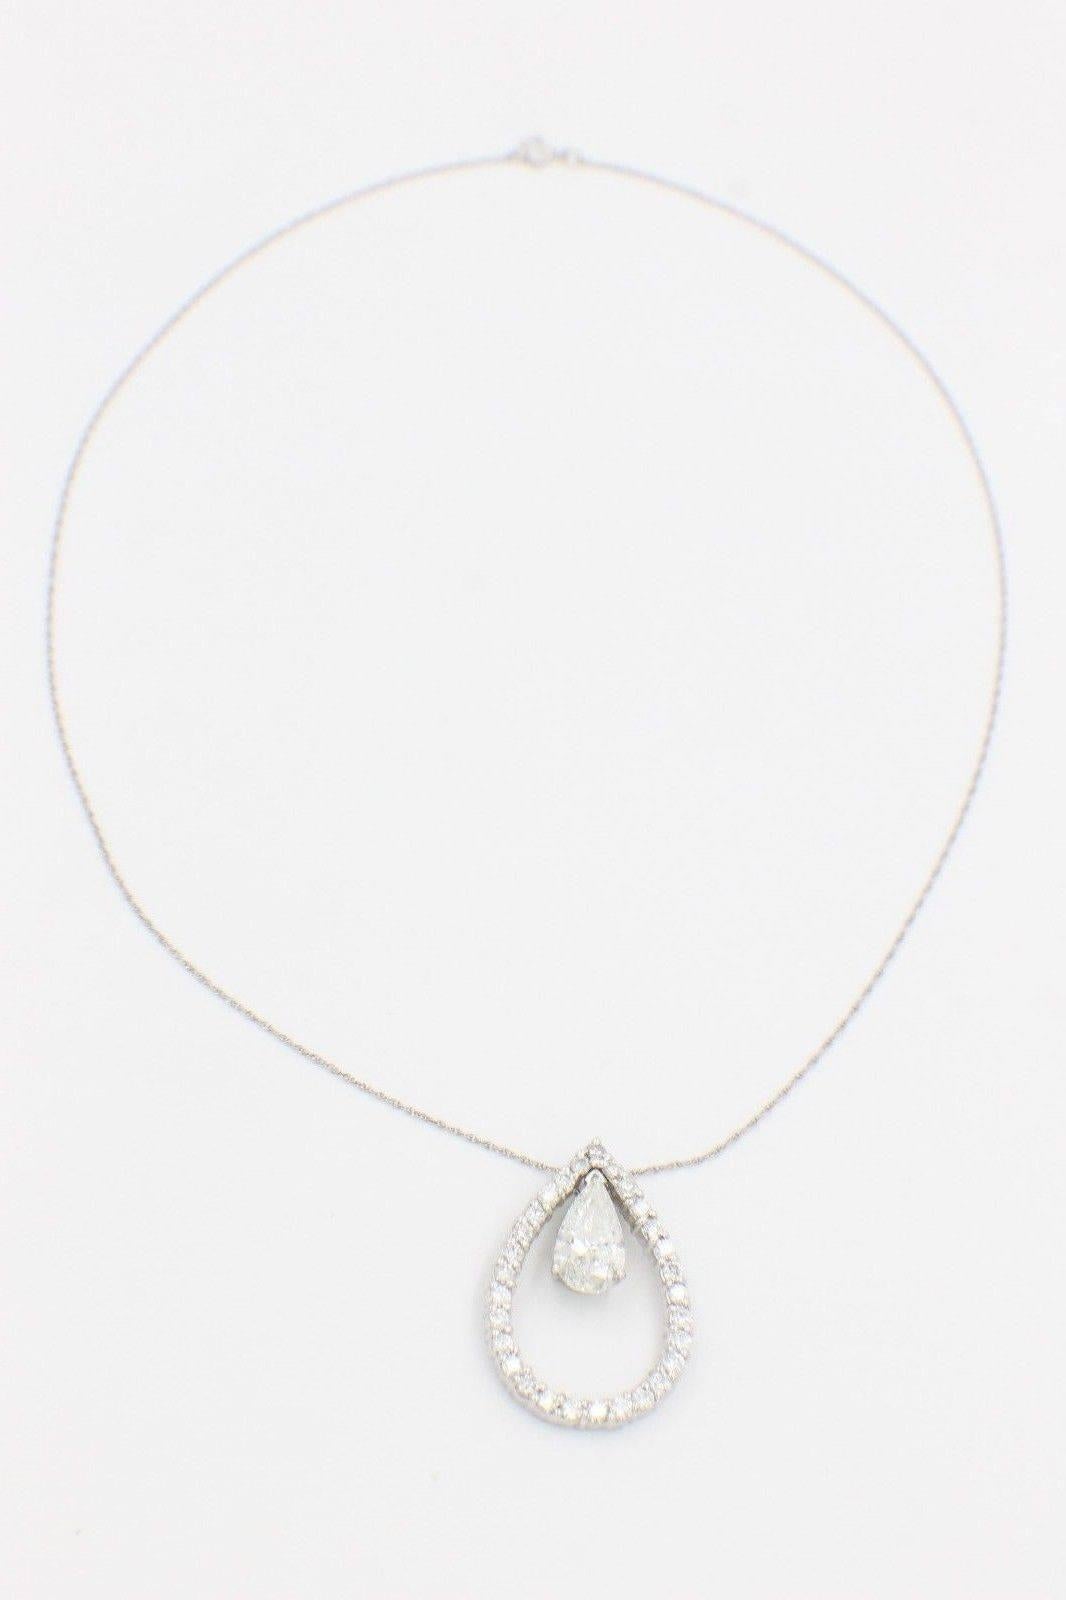 Pear Cut Pear Shape 3.88 Carat Diamond Pendant Necklace in 18 Karat White Gold For Sale